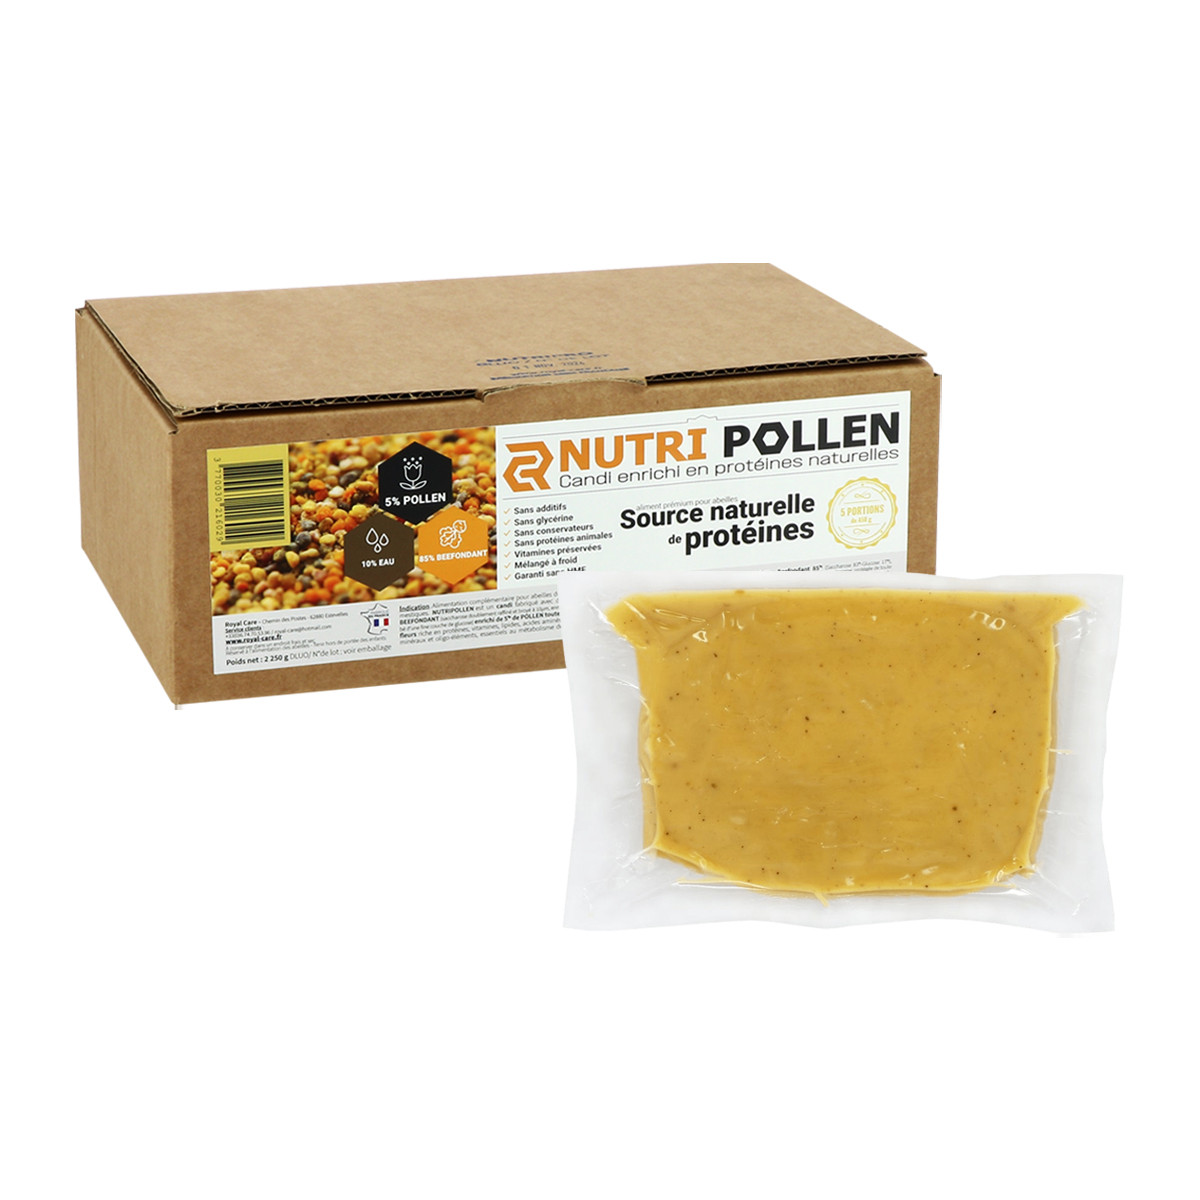 Candi Nutri Pollen 5% - Carton de 5 plaques de 450g